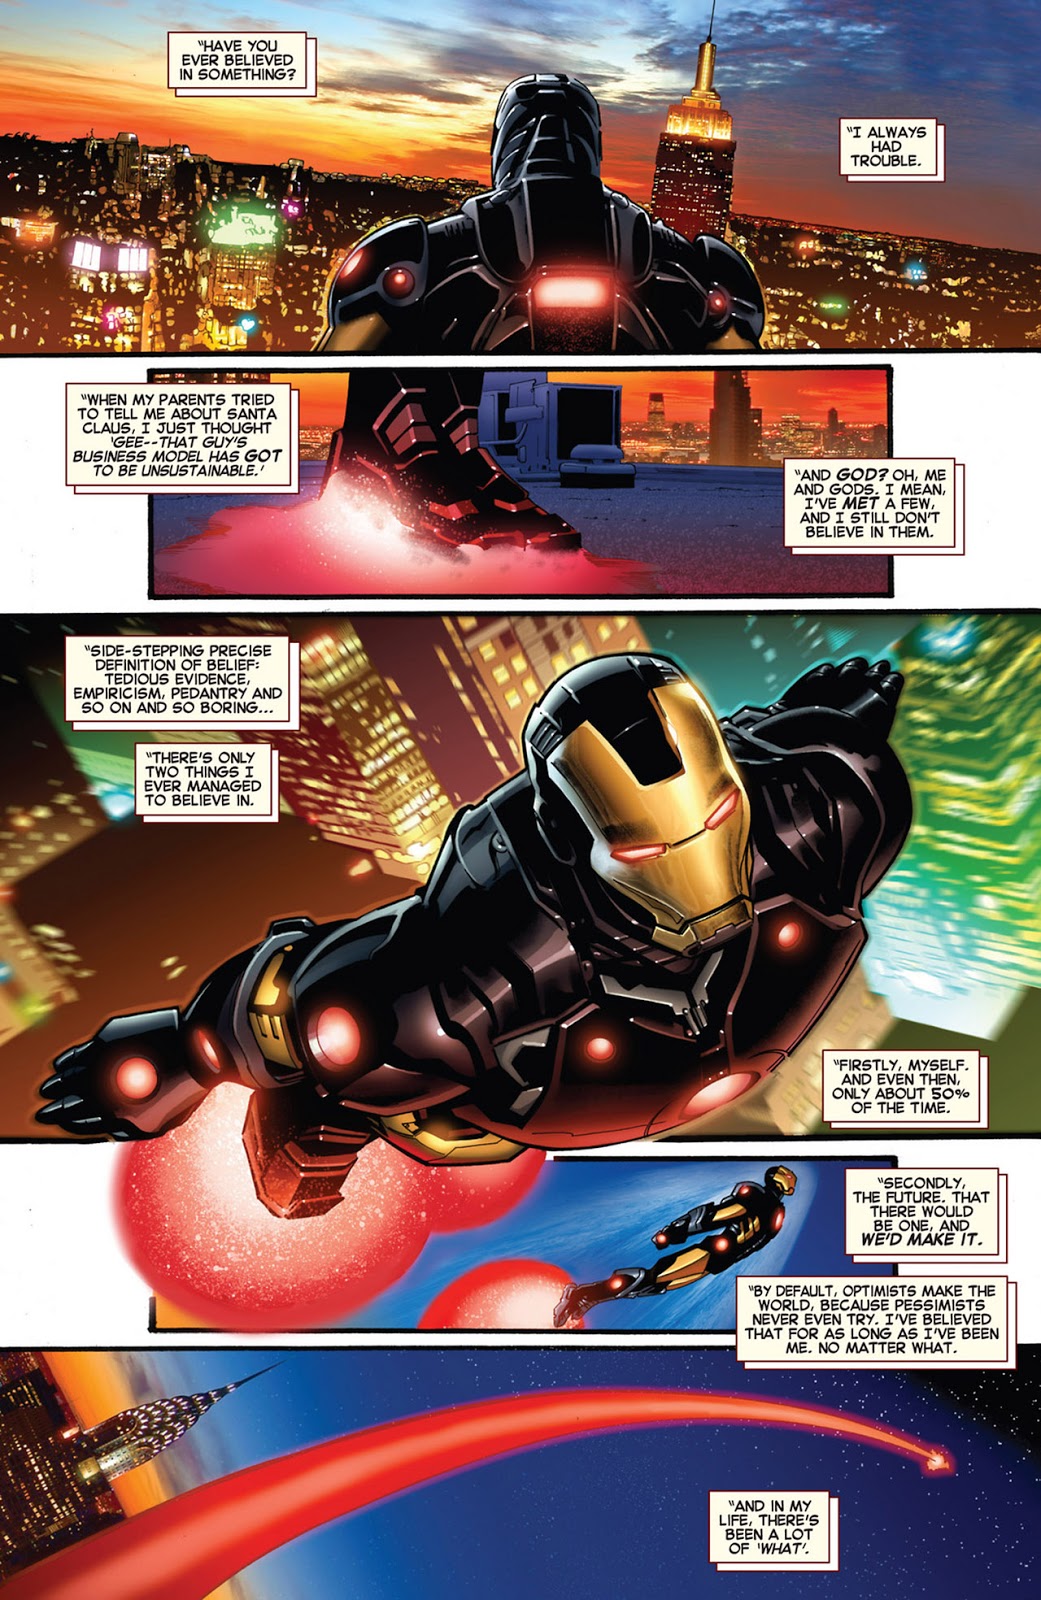 [Bandai] S.H. Figuarts: Iron Man Mark VI Black ver. Iron+Man+Marvel+now+1_1